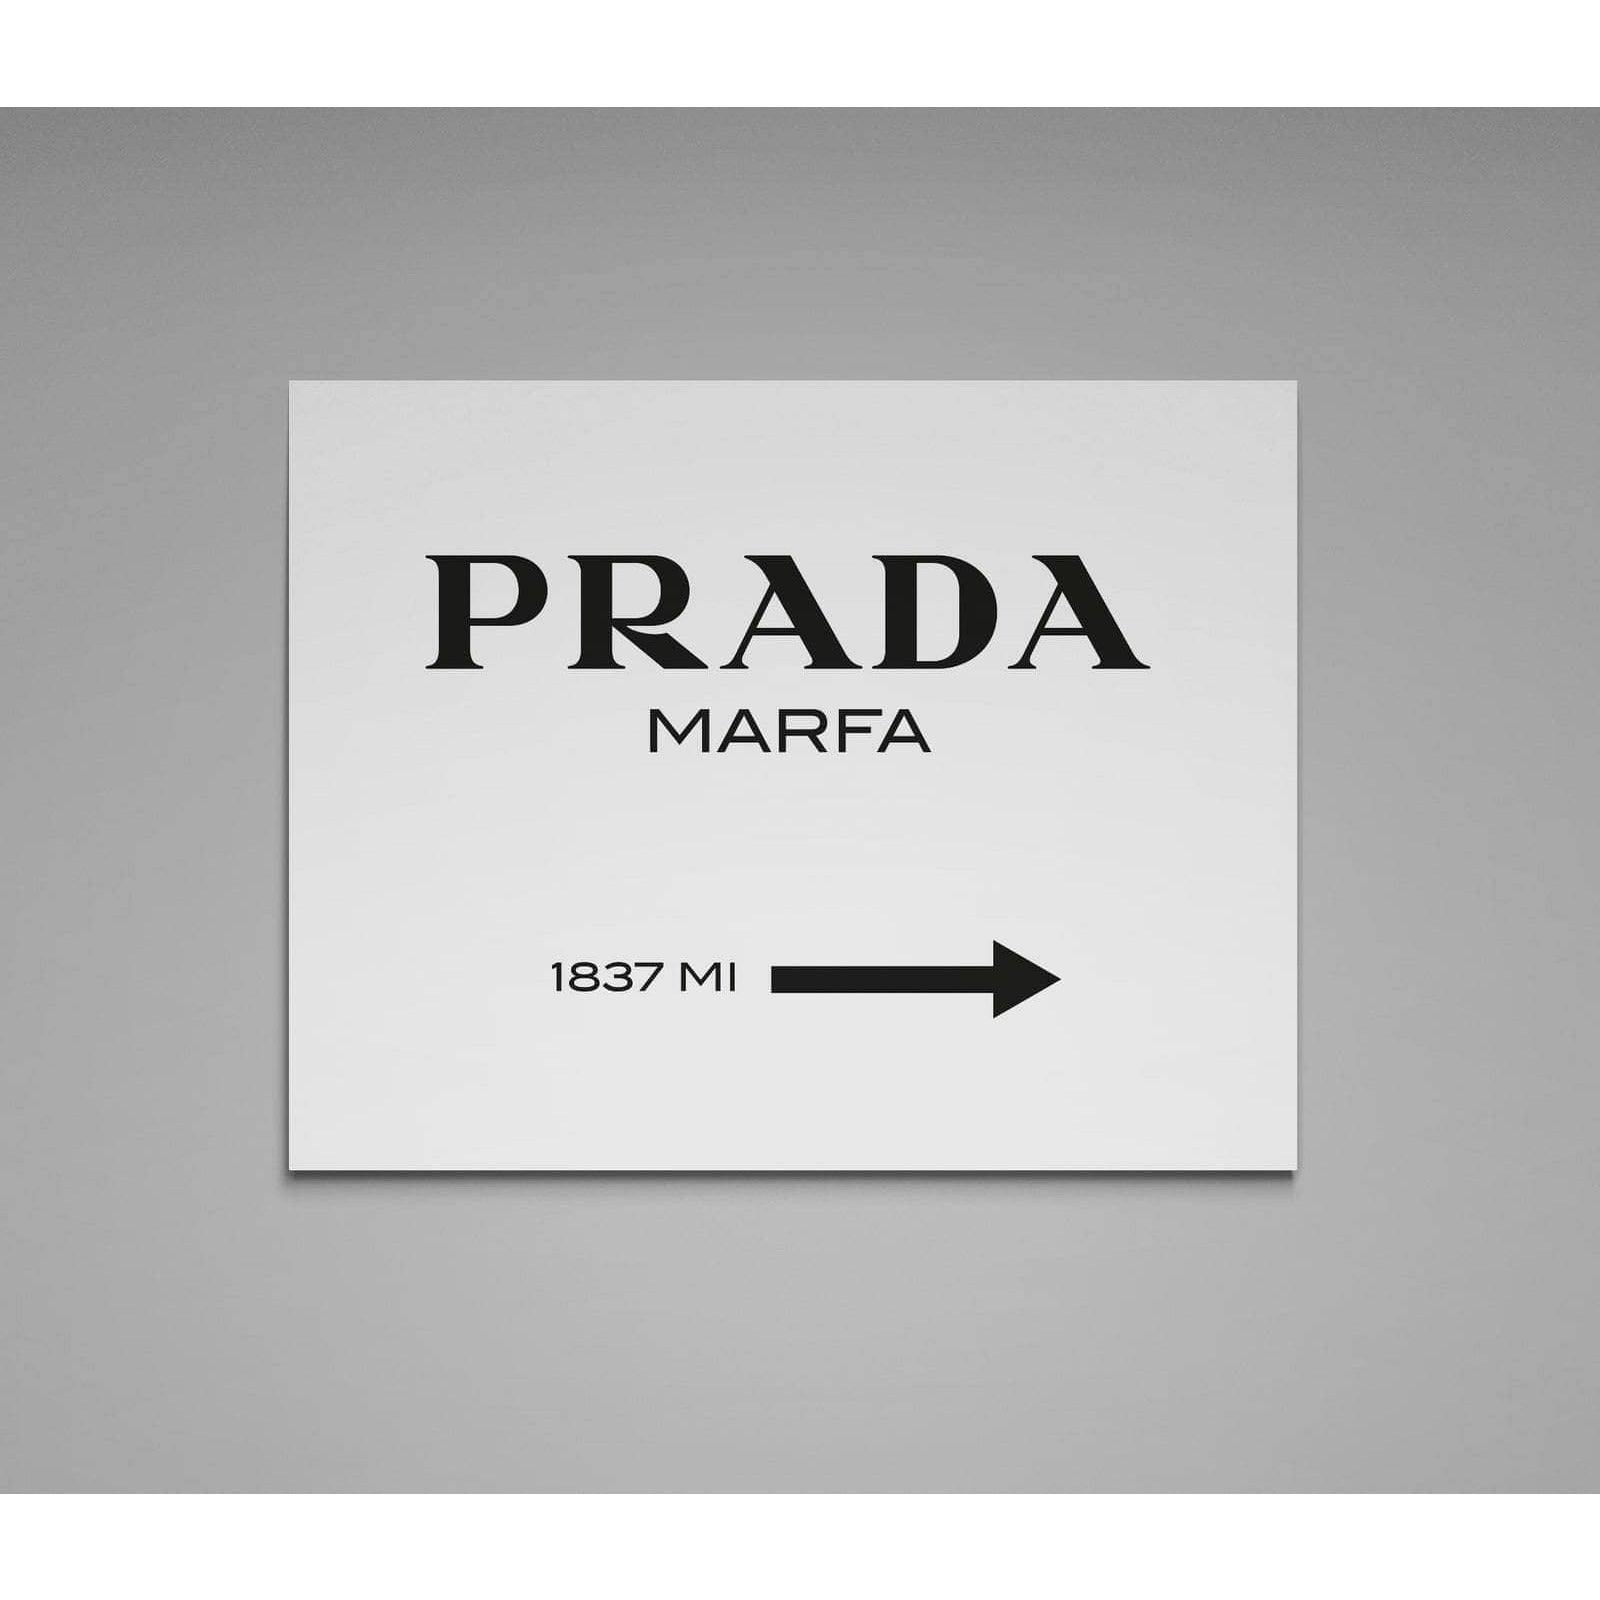 Prada Marfa ❤️ tableau seulement banane impression sur toile pro82